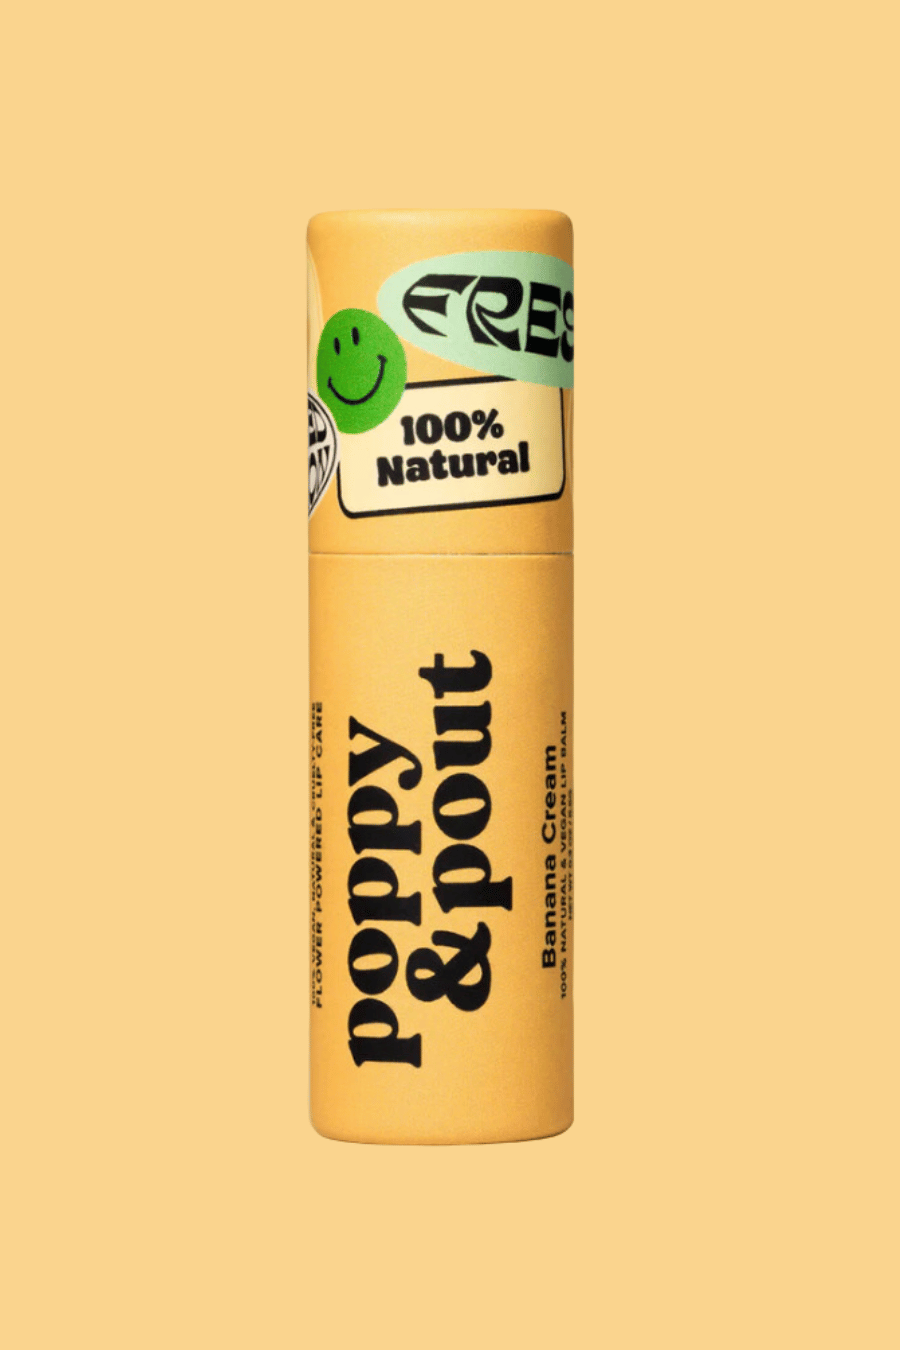 POPPY + POUT "Sunny Daze" Banana Cream Lip Balm